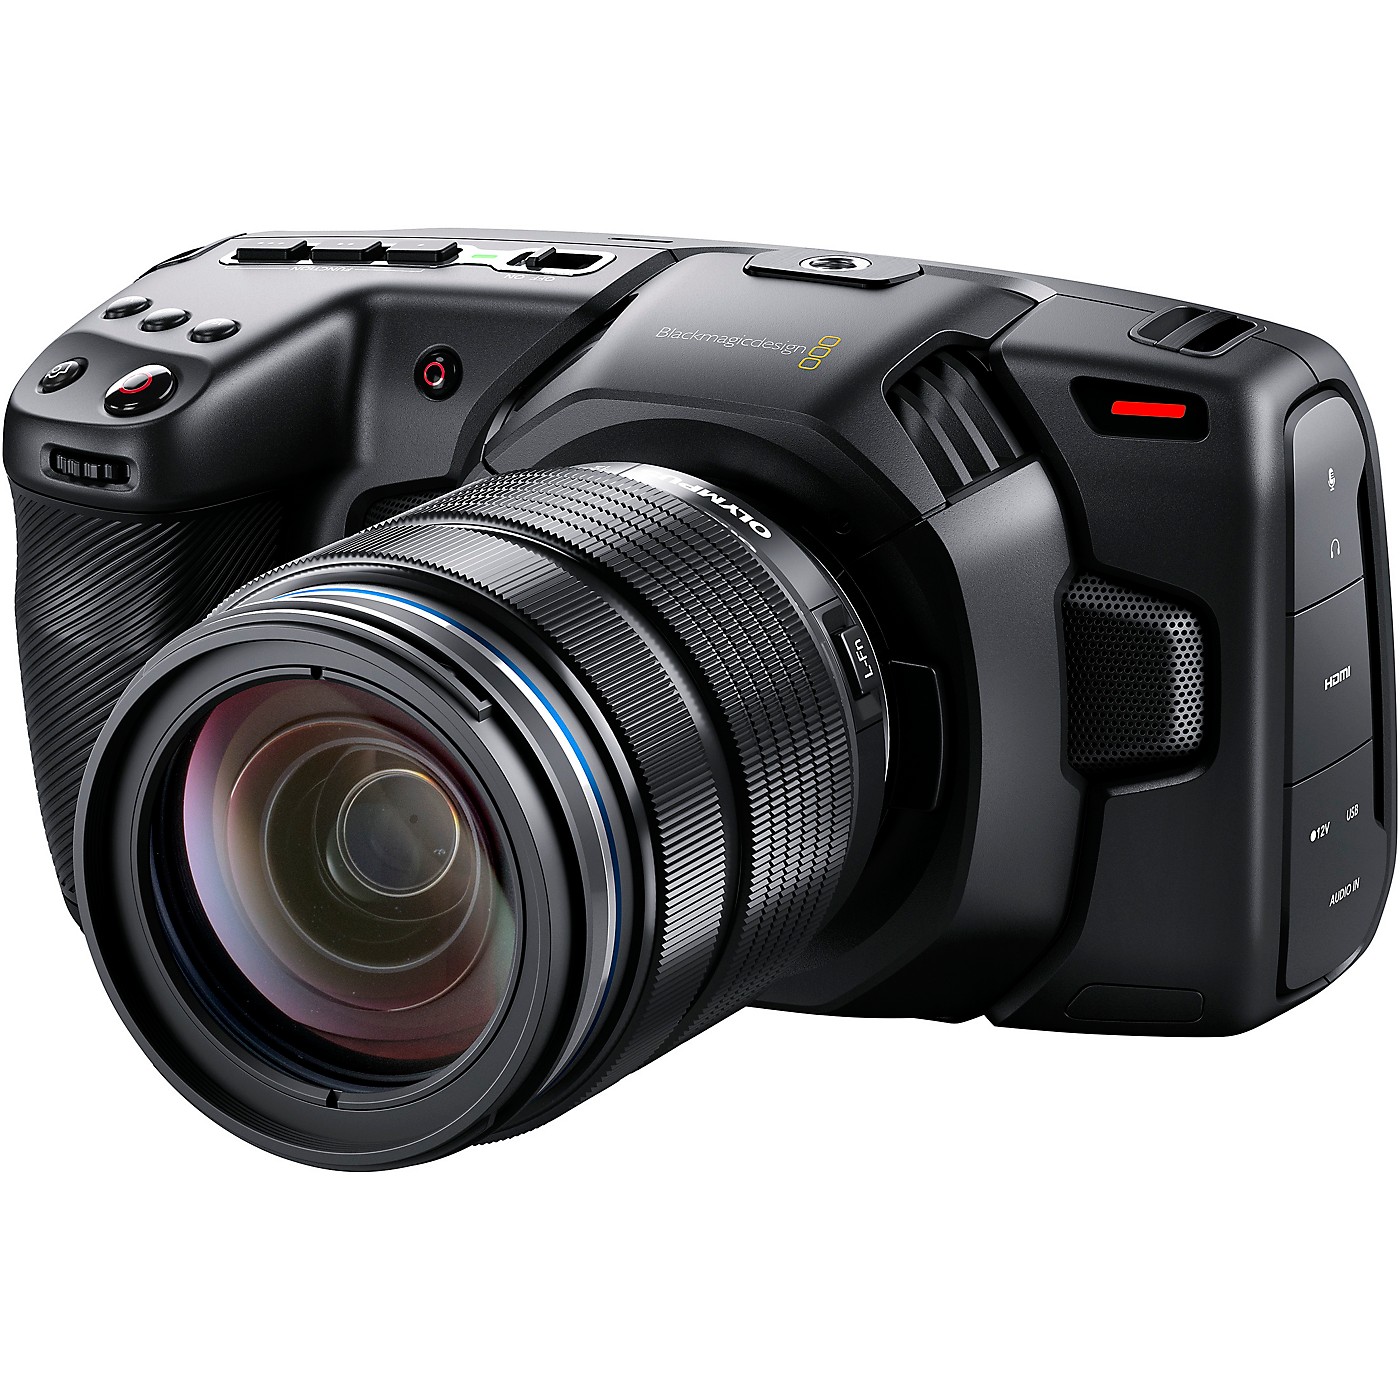 Blackmagic Design Pocket Cinema Camera 4K thumbnail